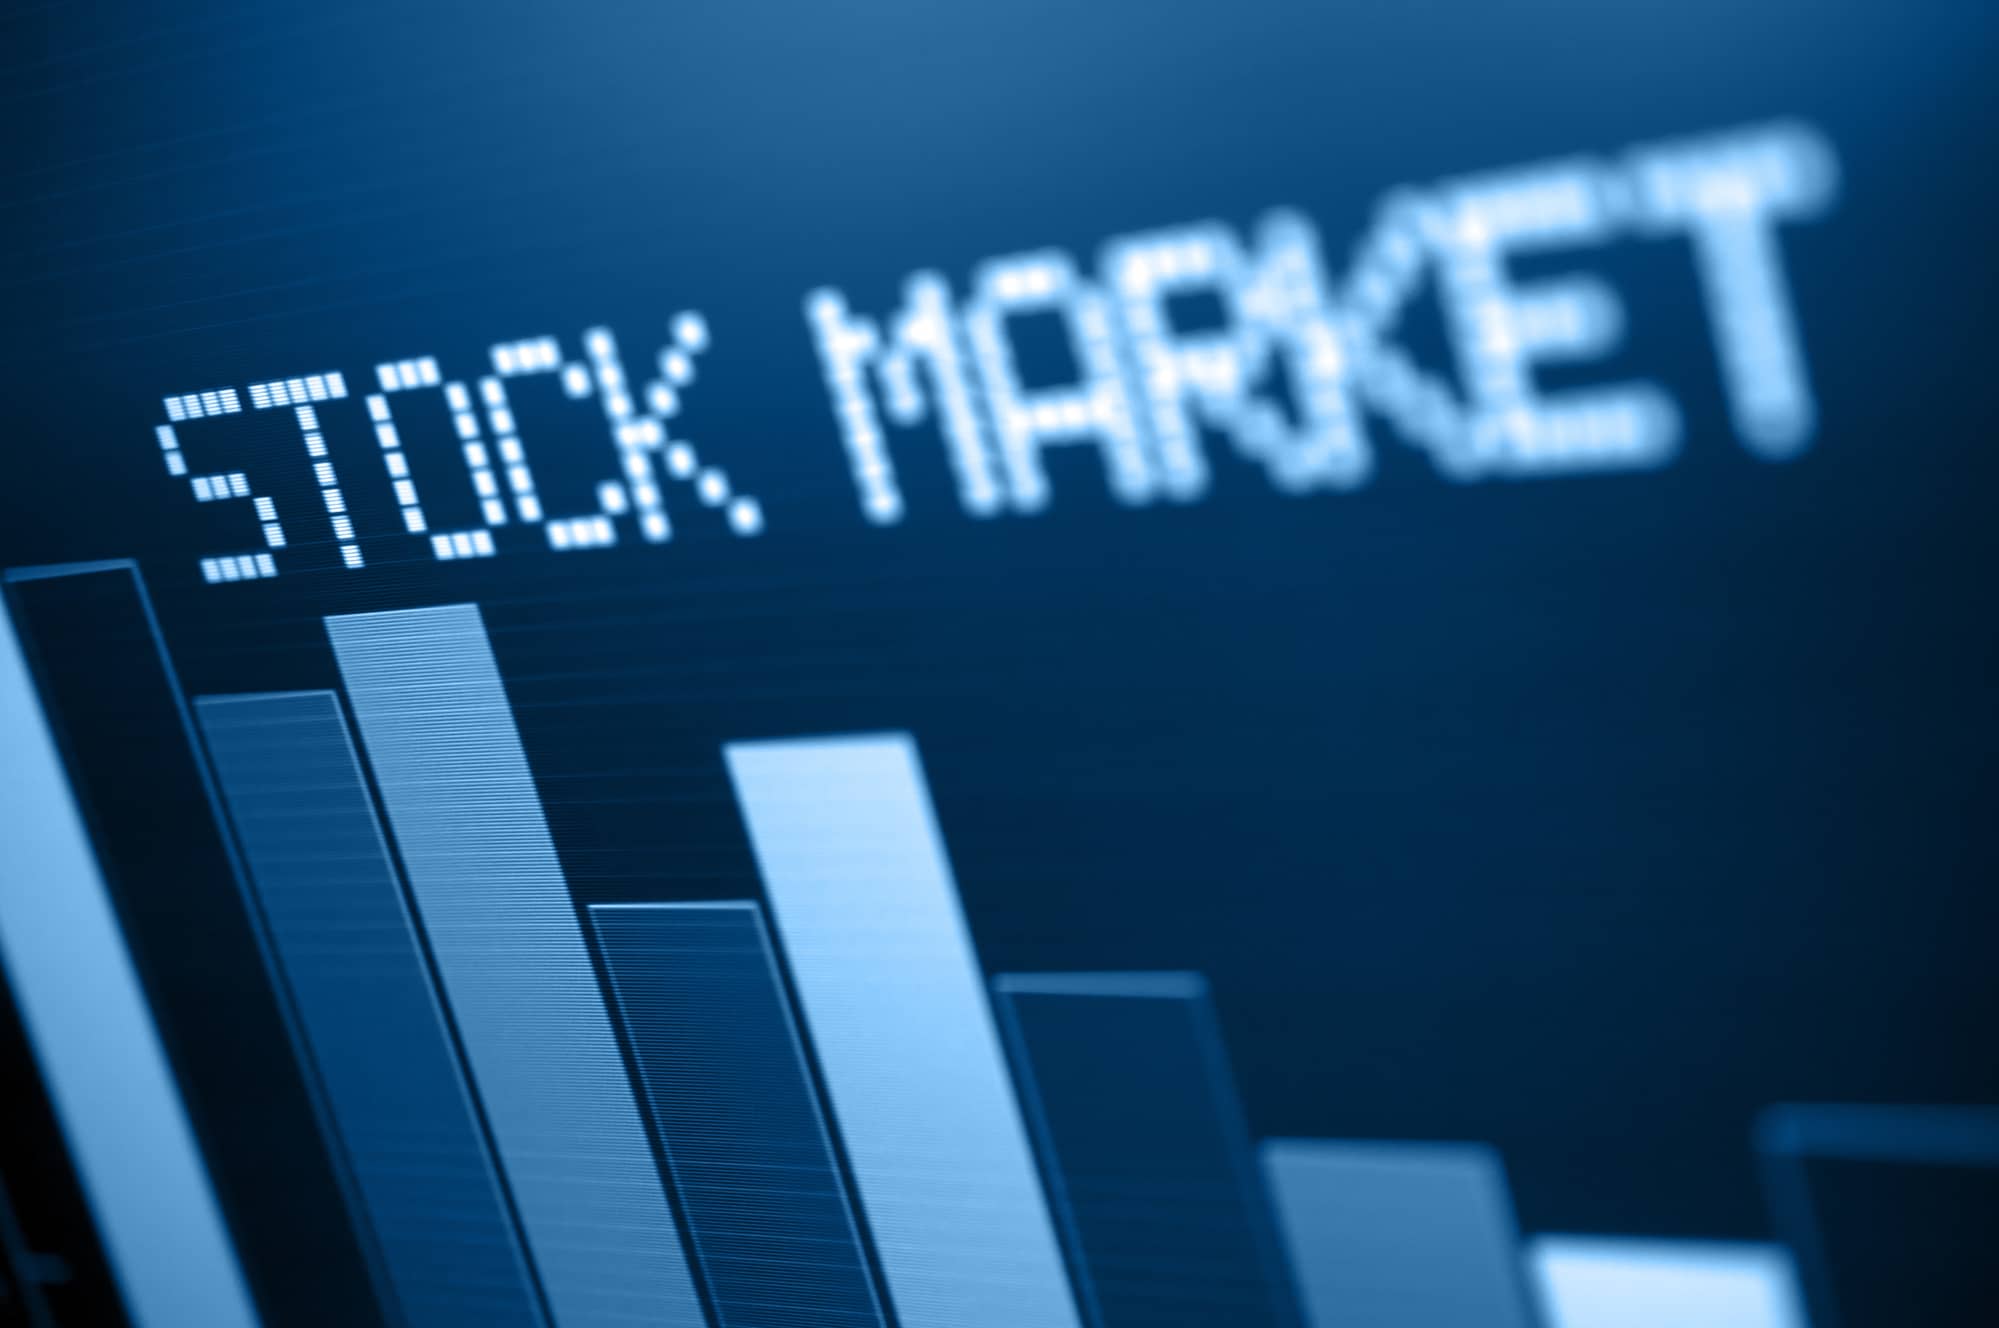 Blue stock market graphic image.